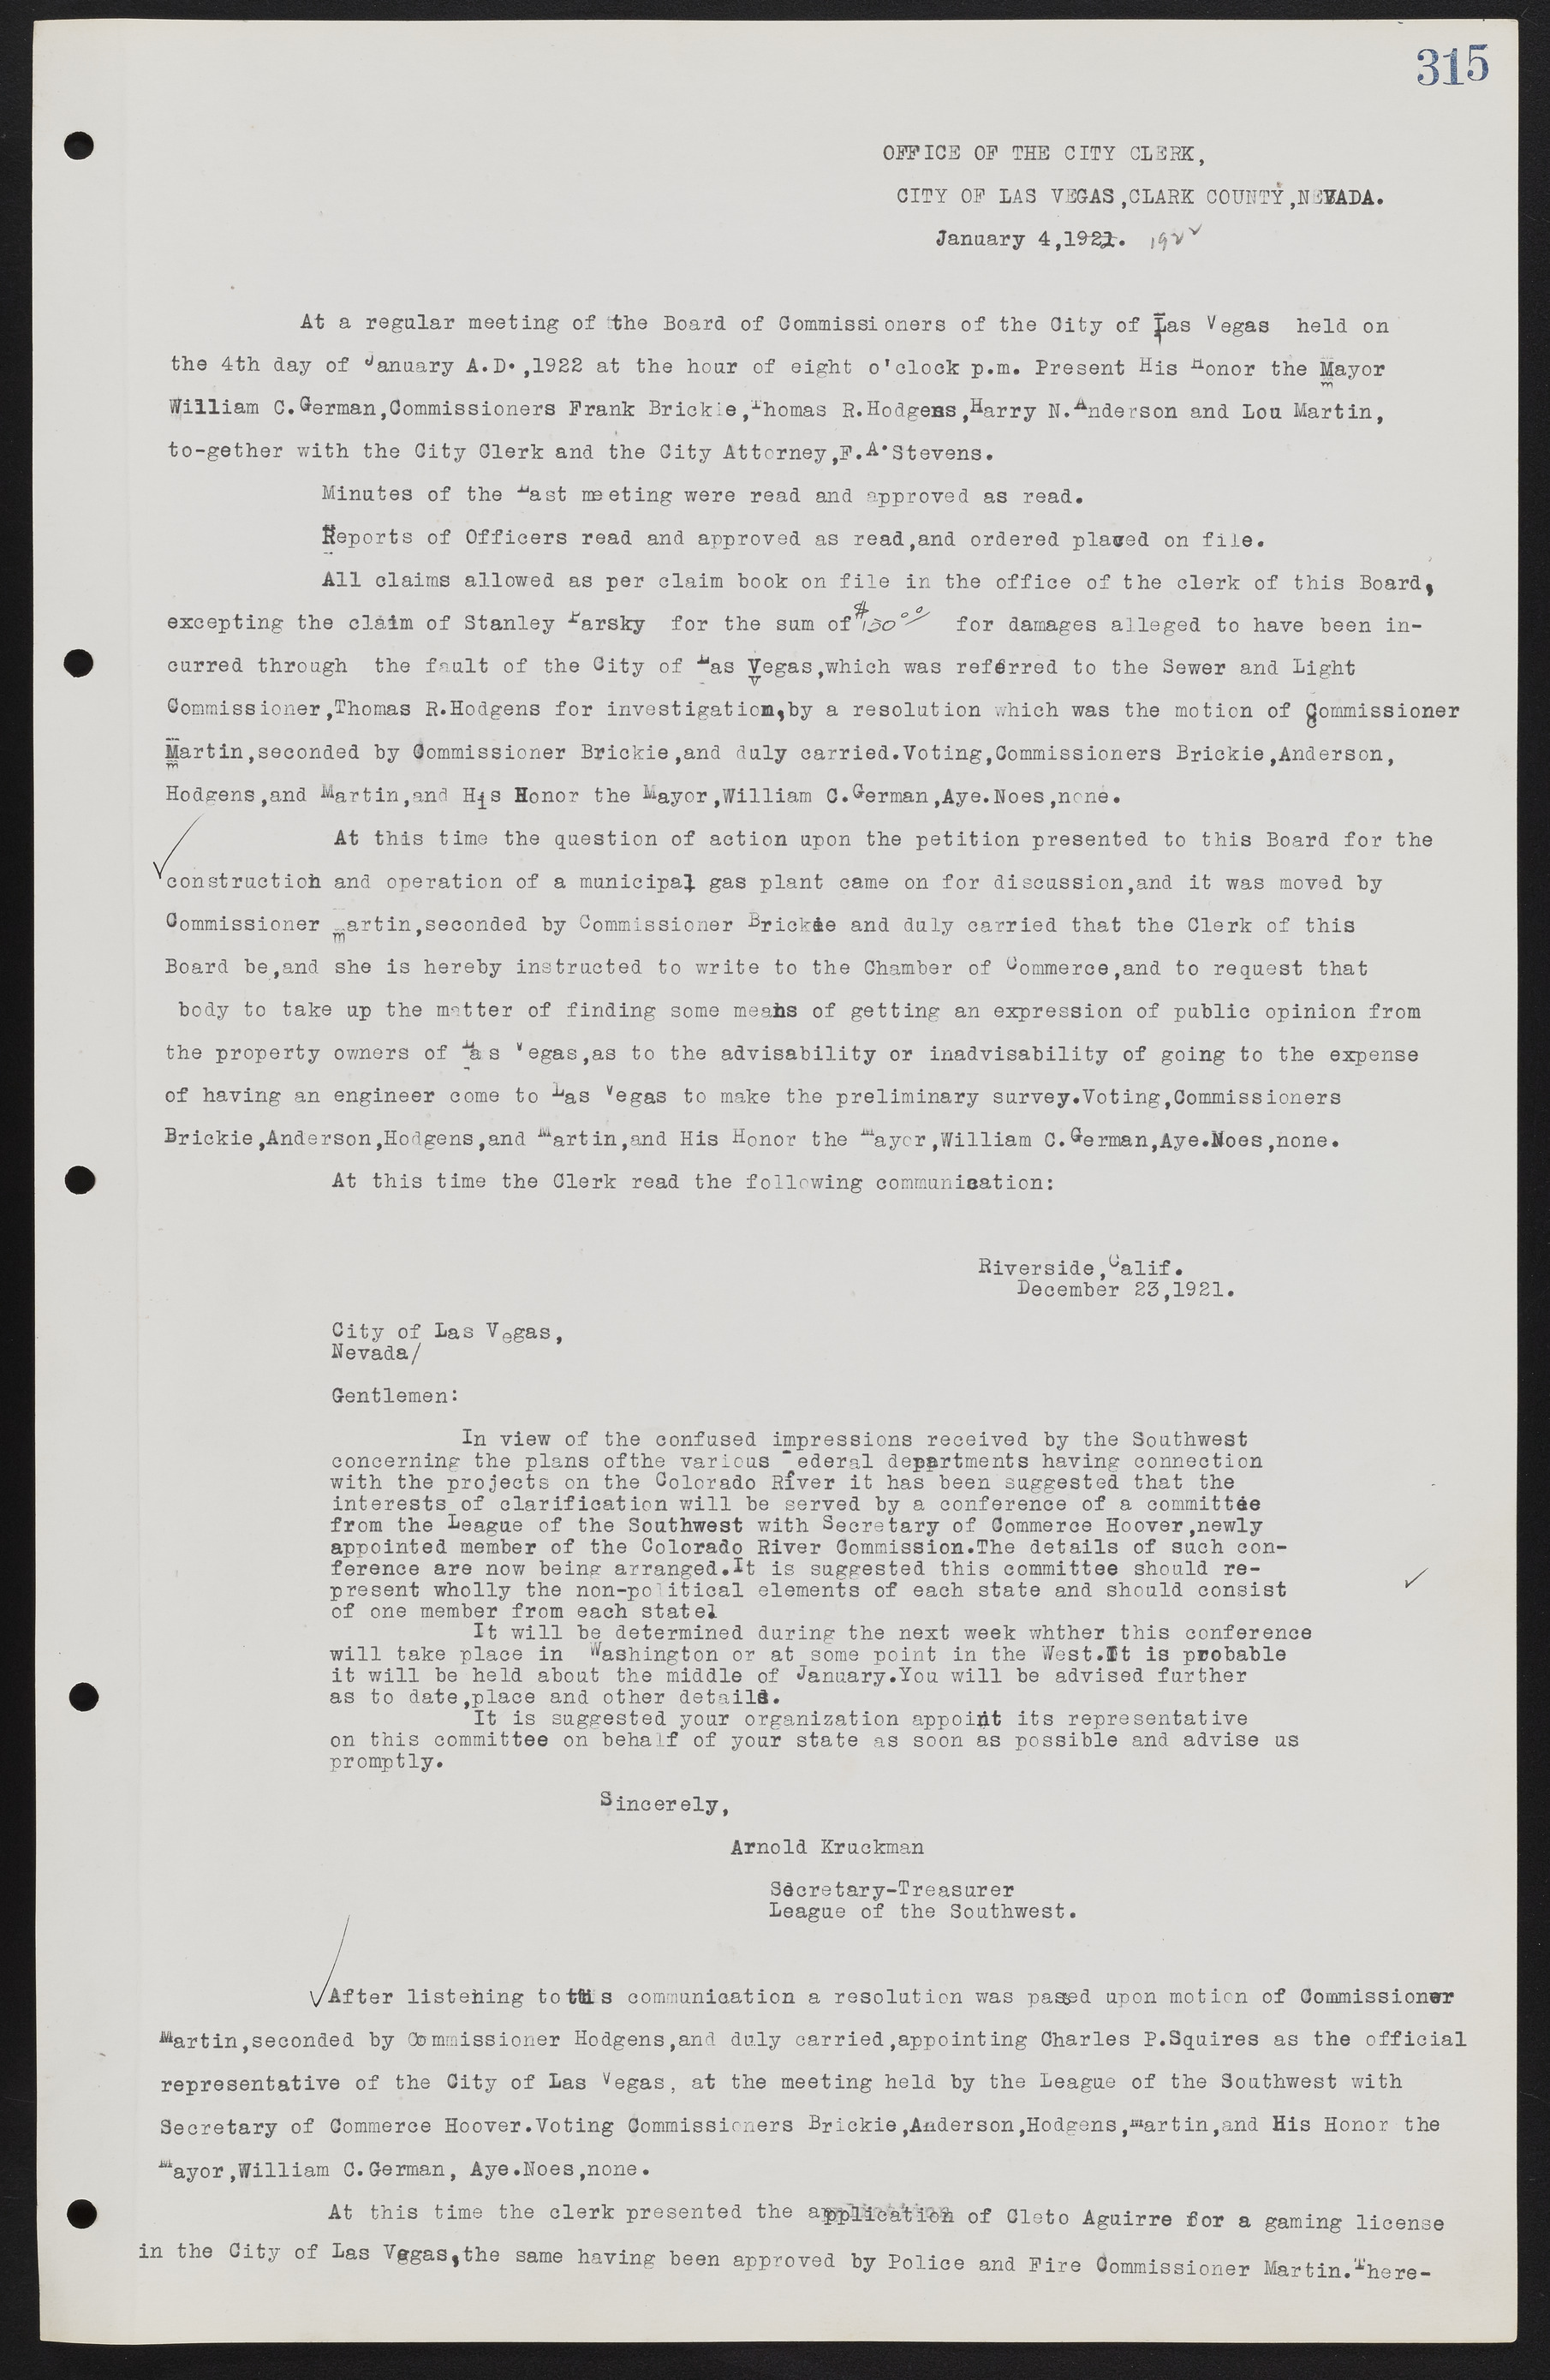 Las Vegas City Commission Minutes, June 22, 1911 to February 7, 1922, lvc000001-331